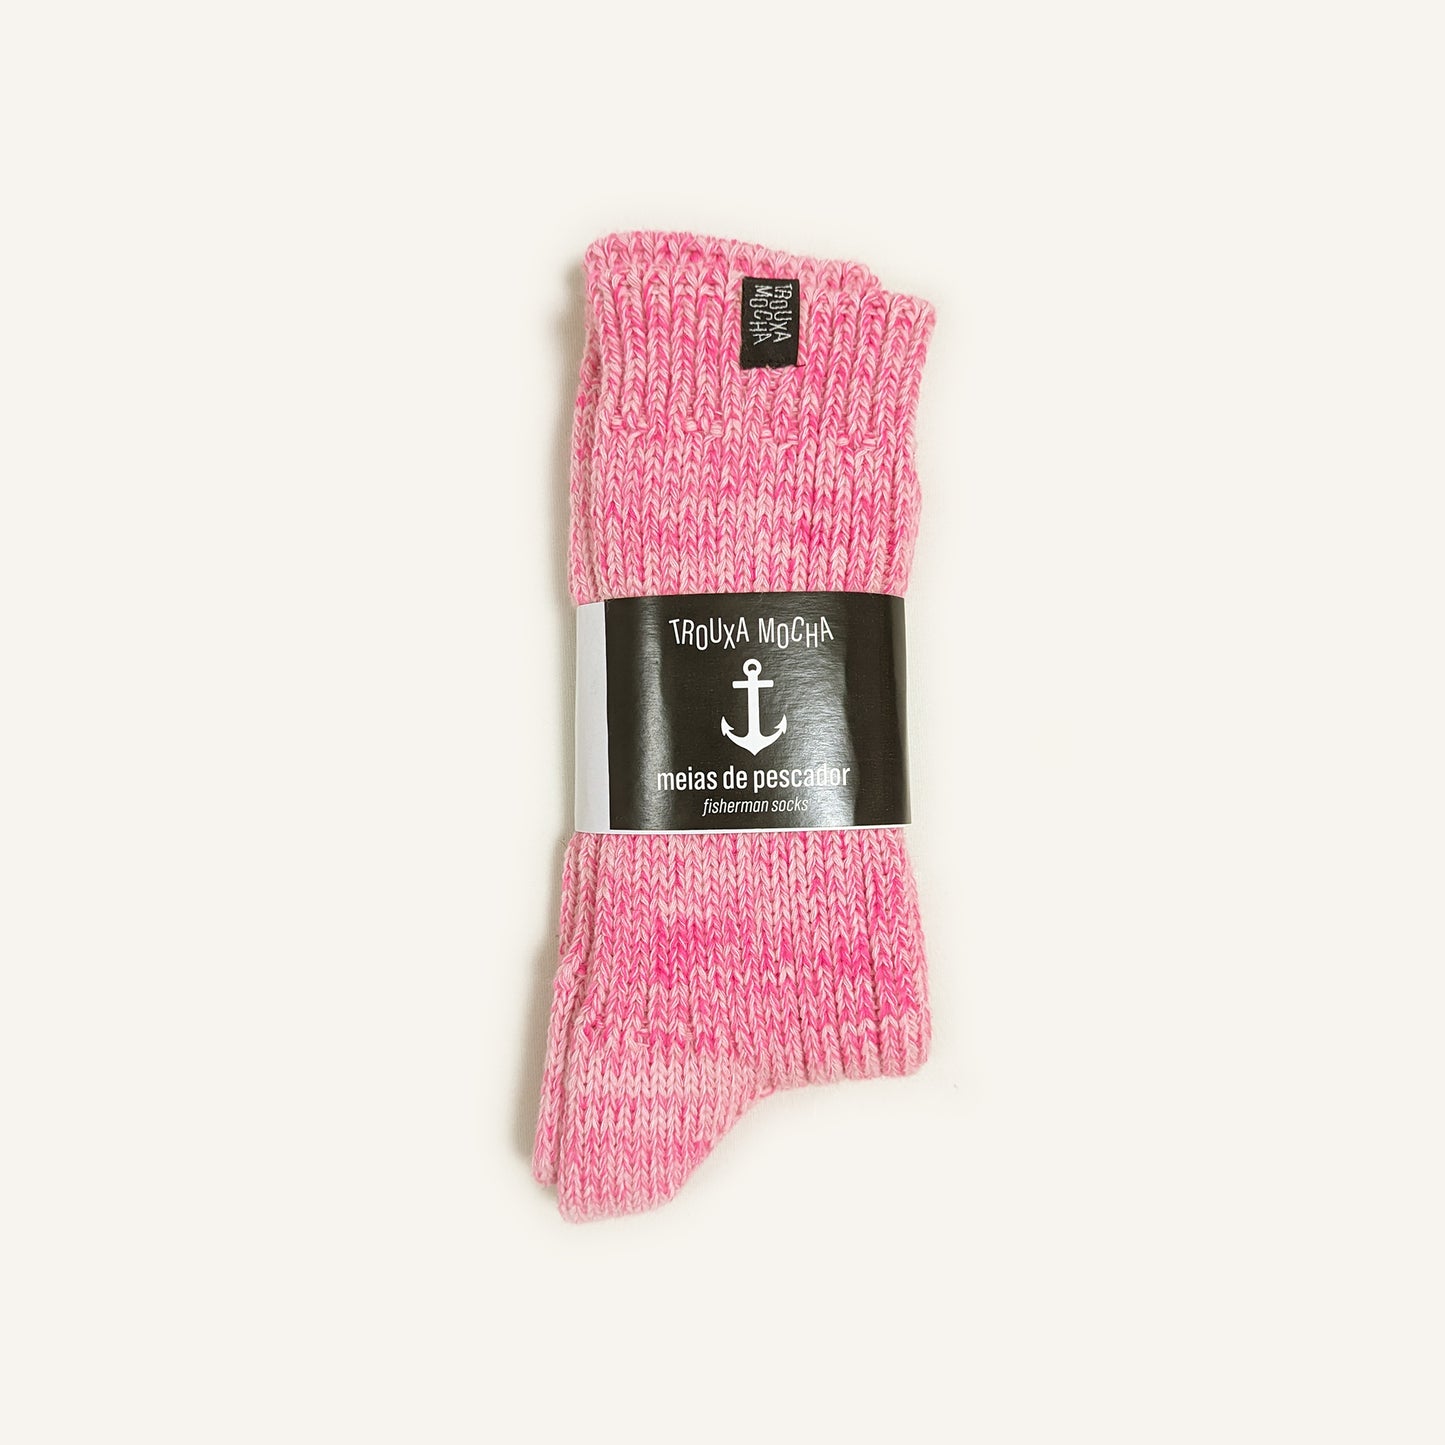 Fisherman Socks